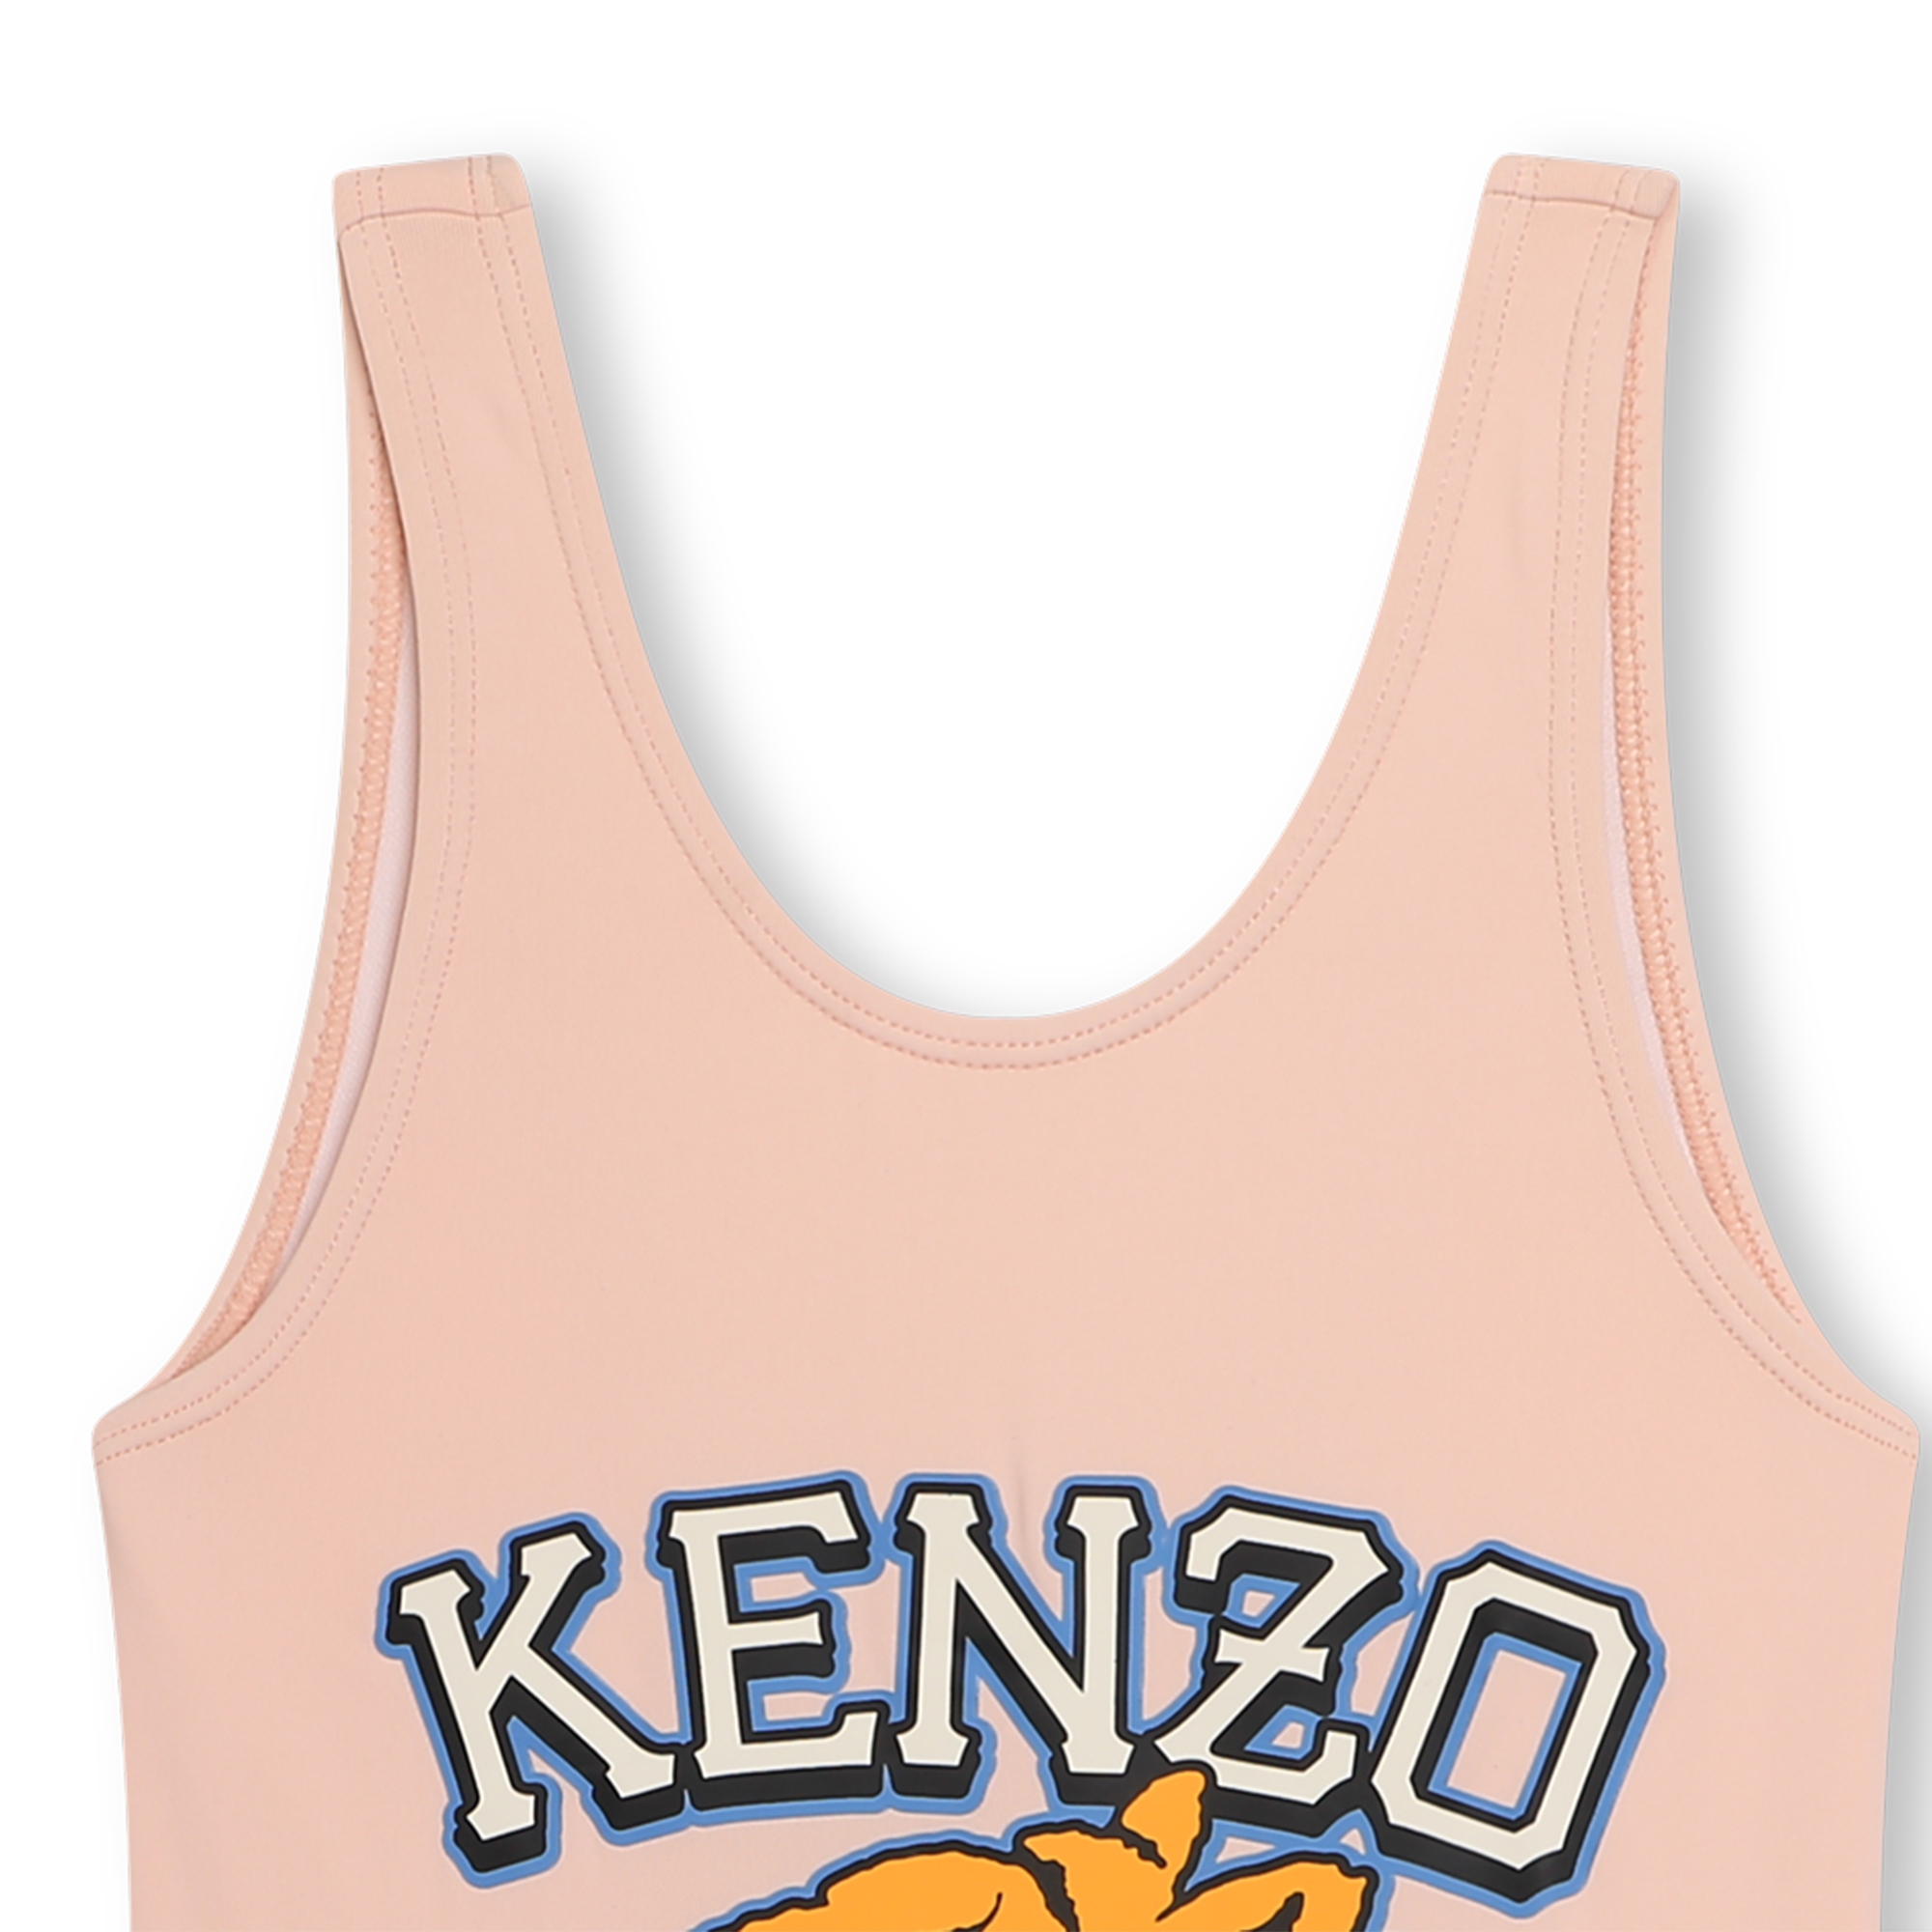 Swimming costume KENZO KIDS for GIRL